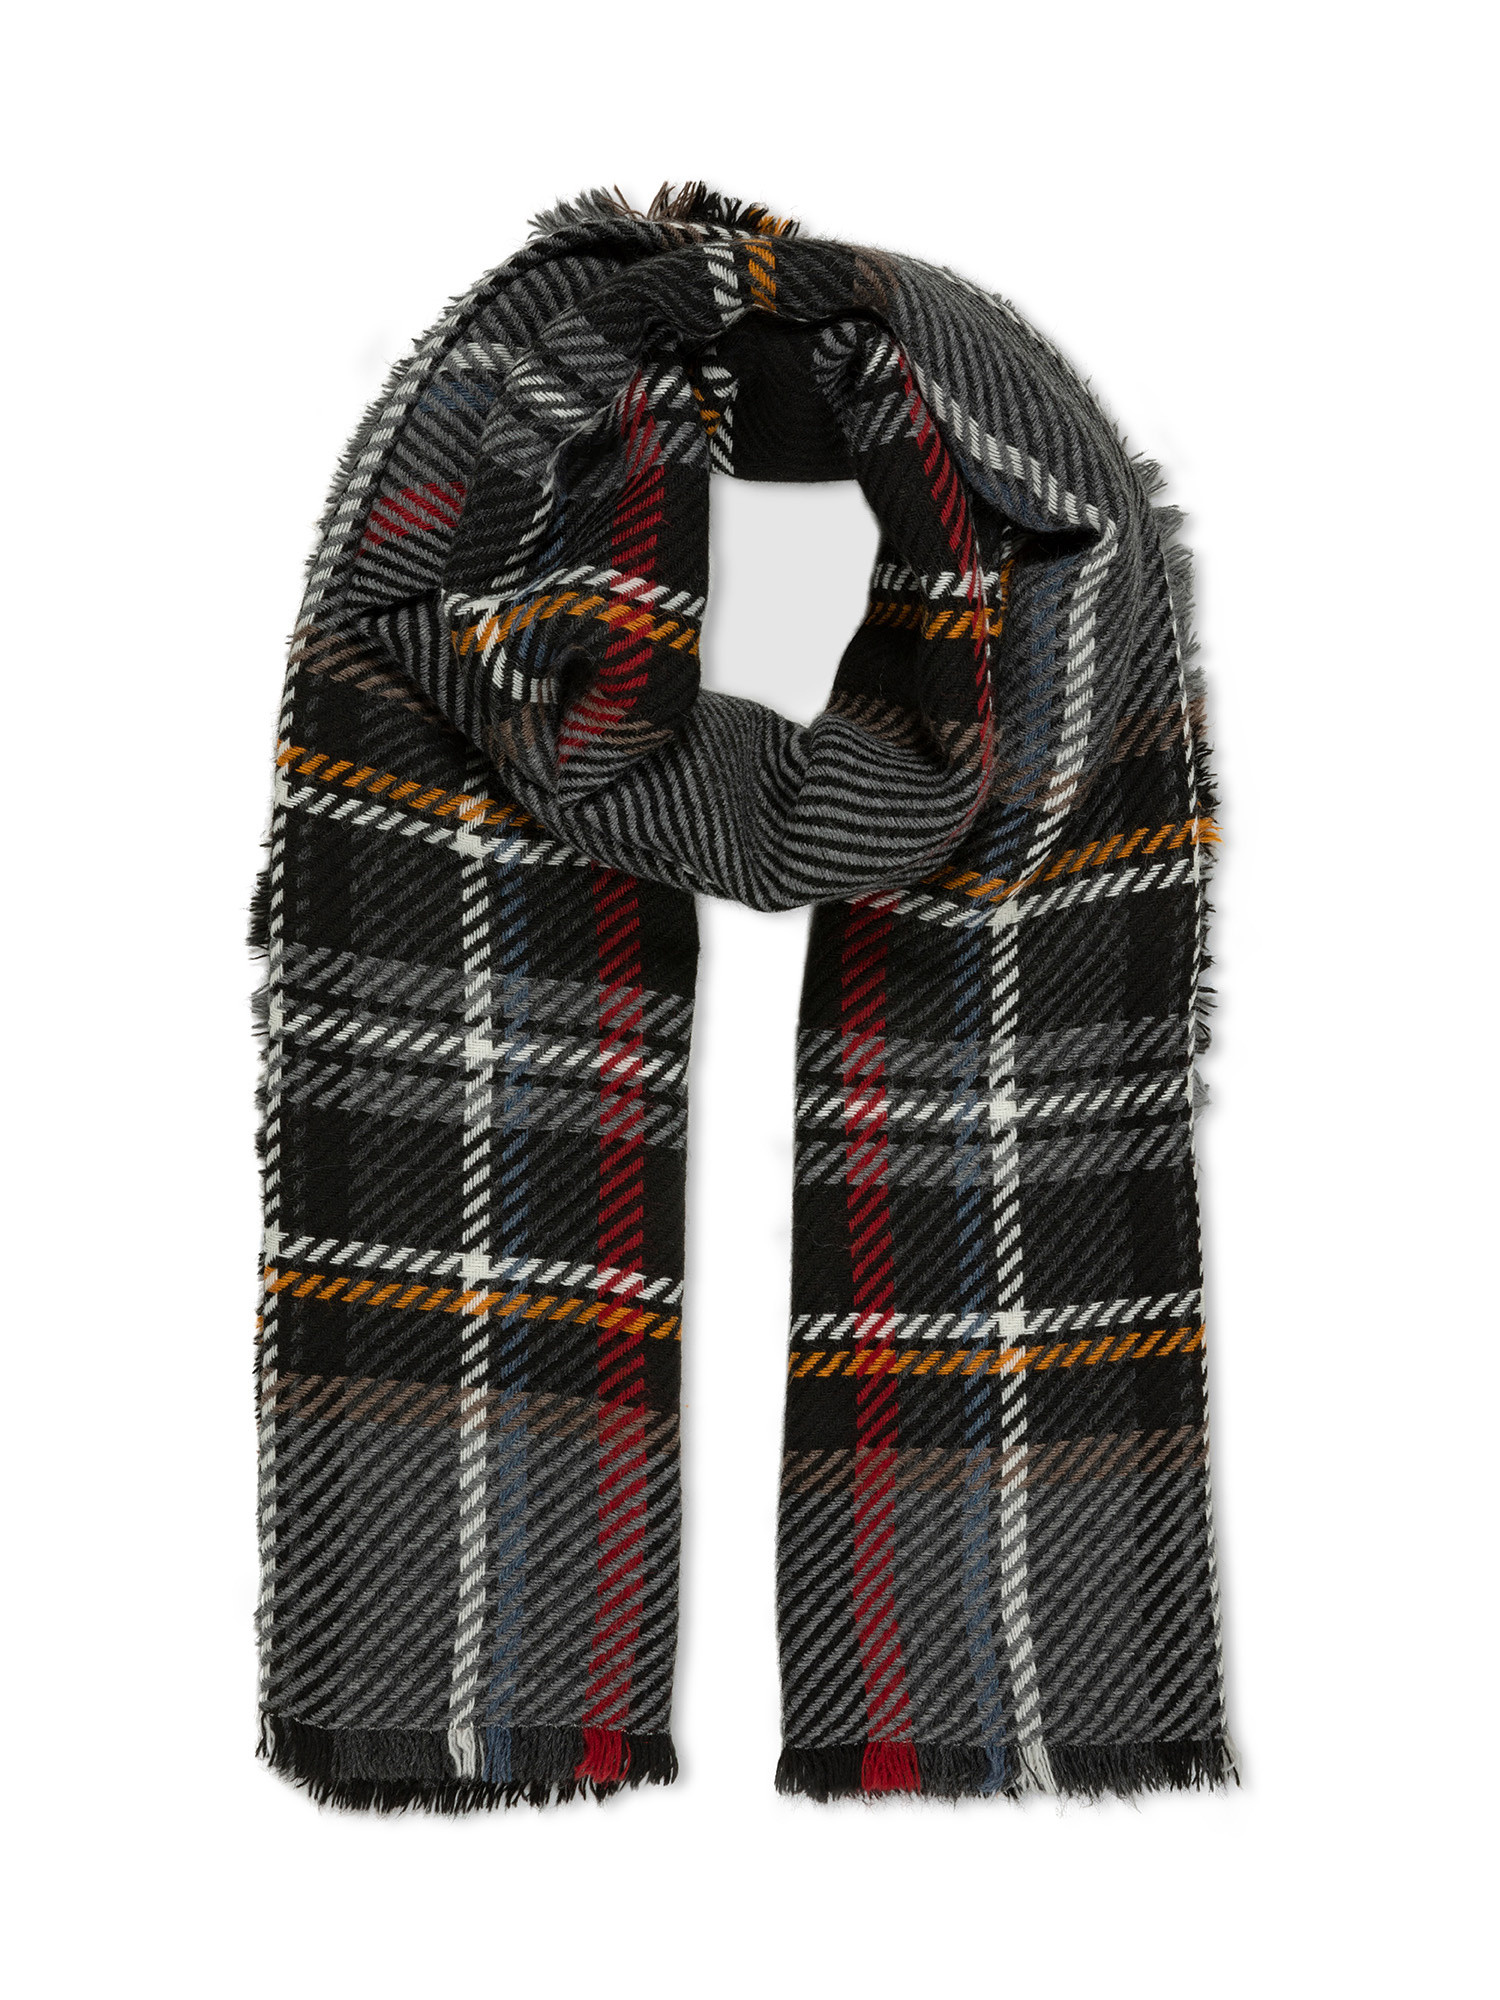 Luca D'Altieri - Scottish scarf, Black, large image number 0